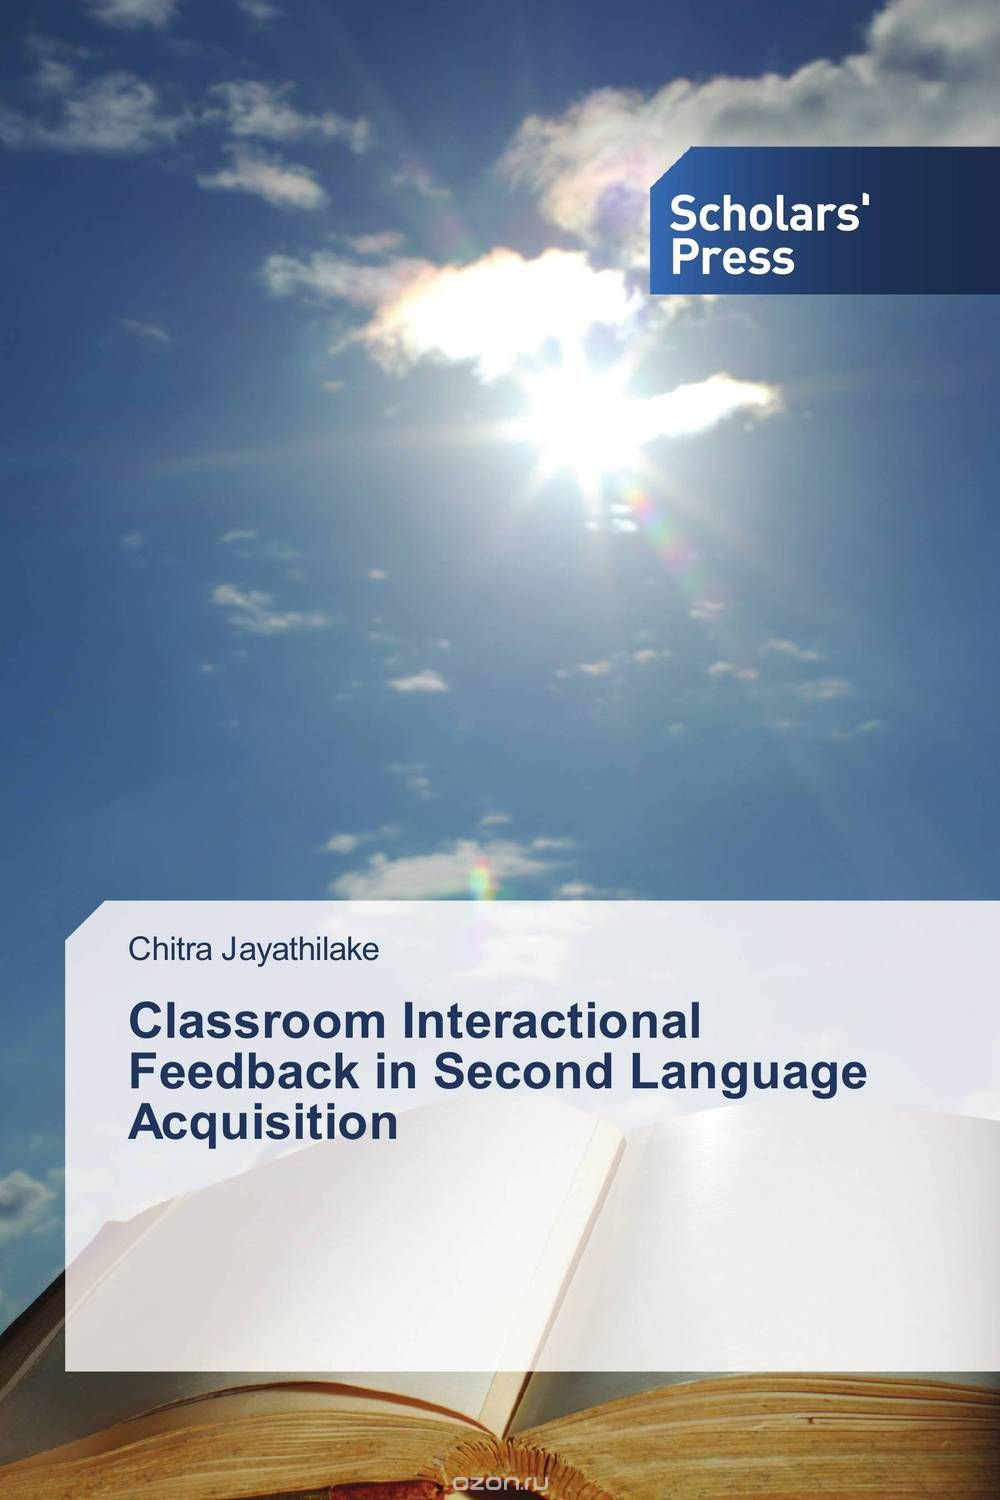 Скачать книгу "Classroom Interactional Feedback in Second Language Acquisition"